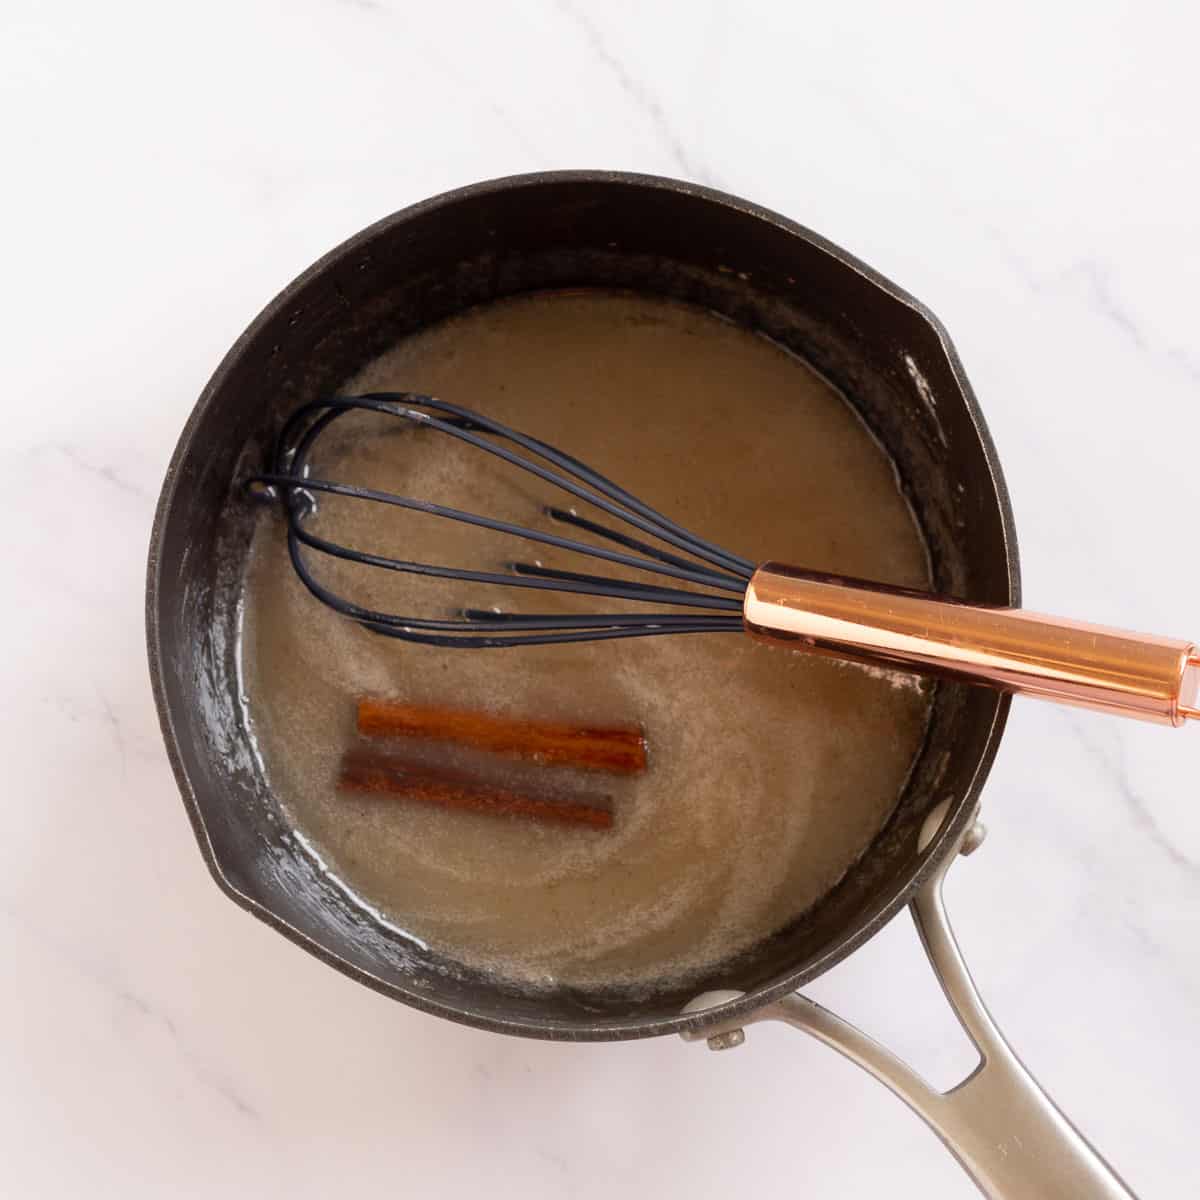 Vegan milk syrup in a pan